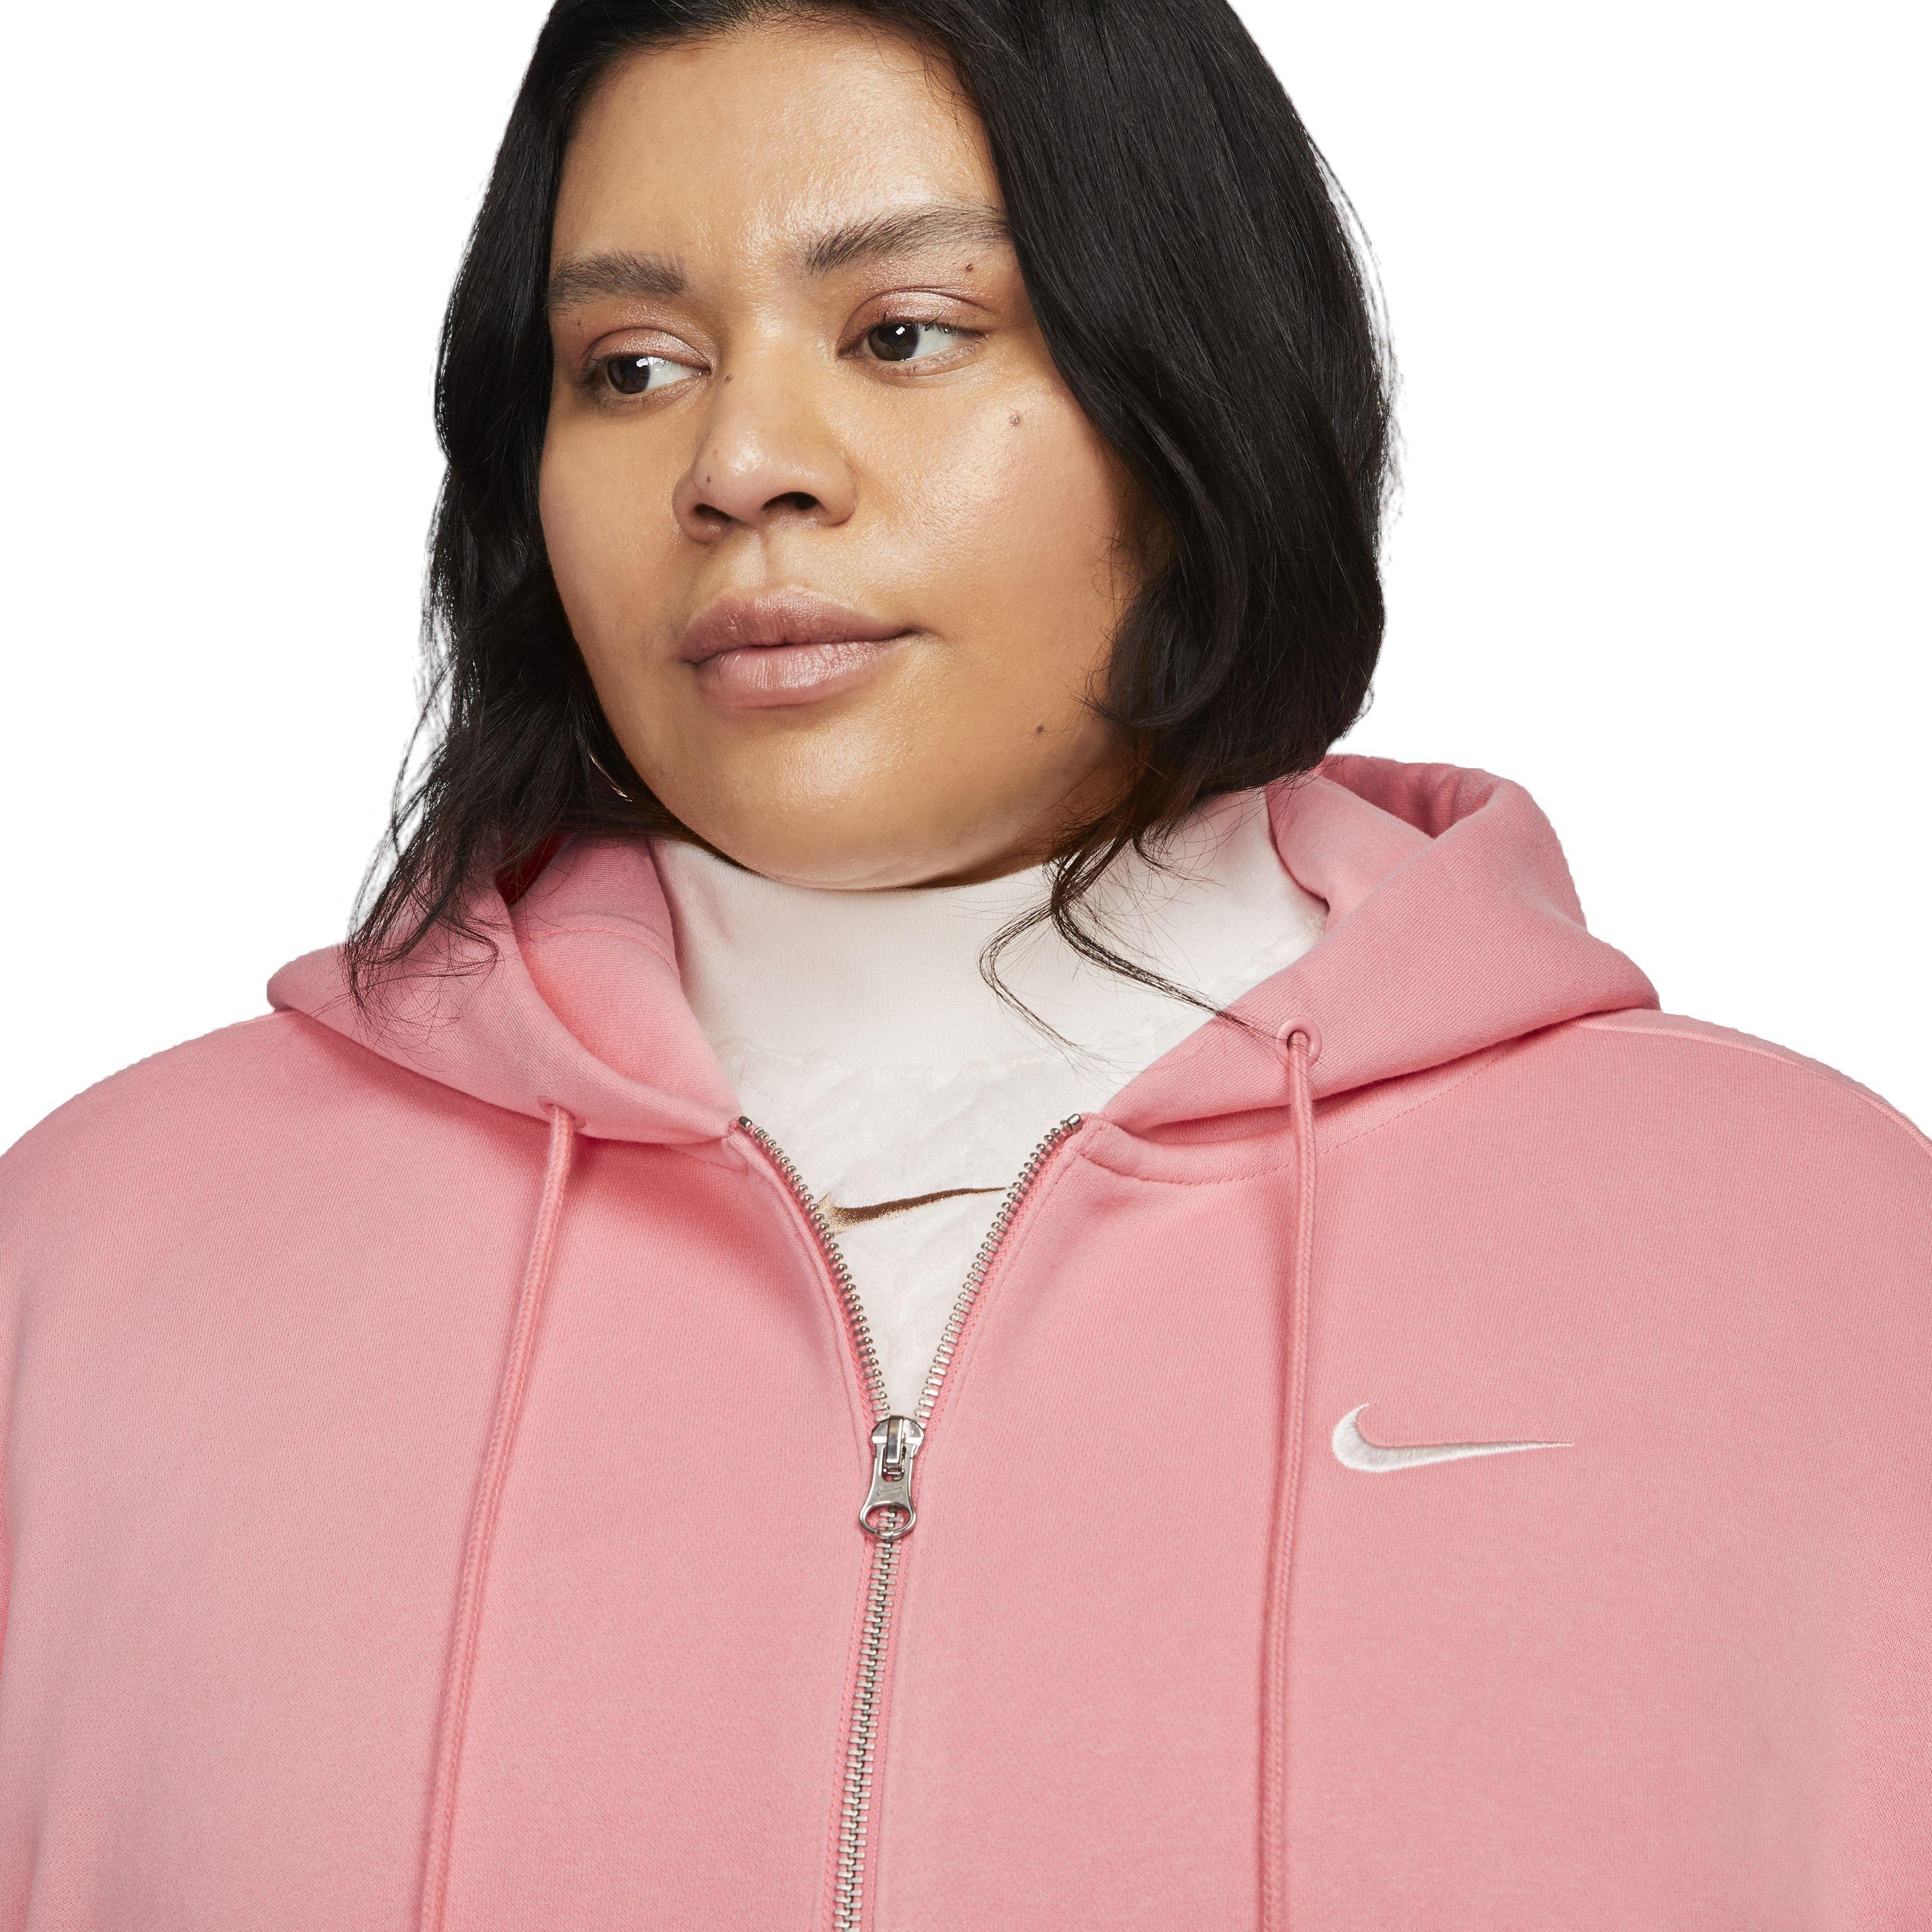 Nike Womens Phoenix Fleece Hoodie - Pink